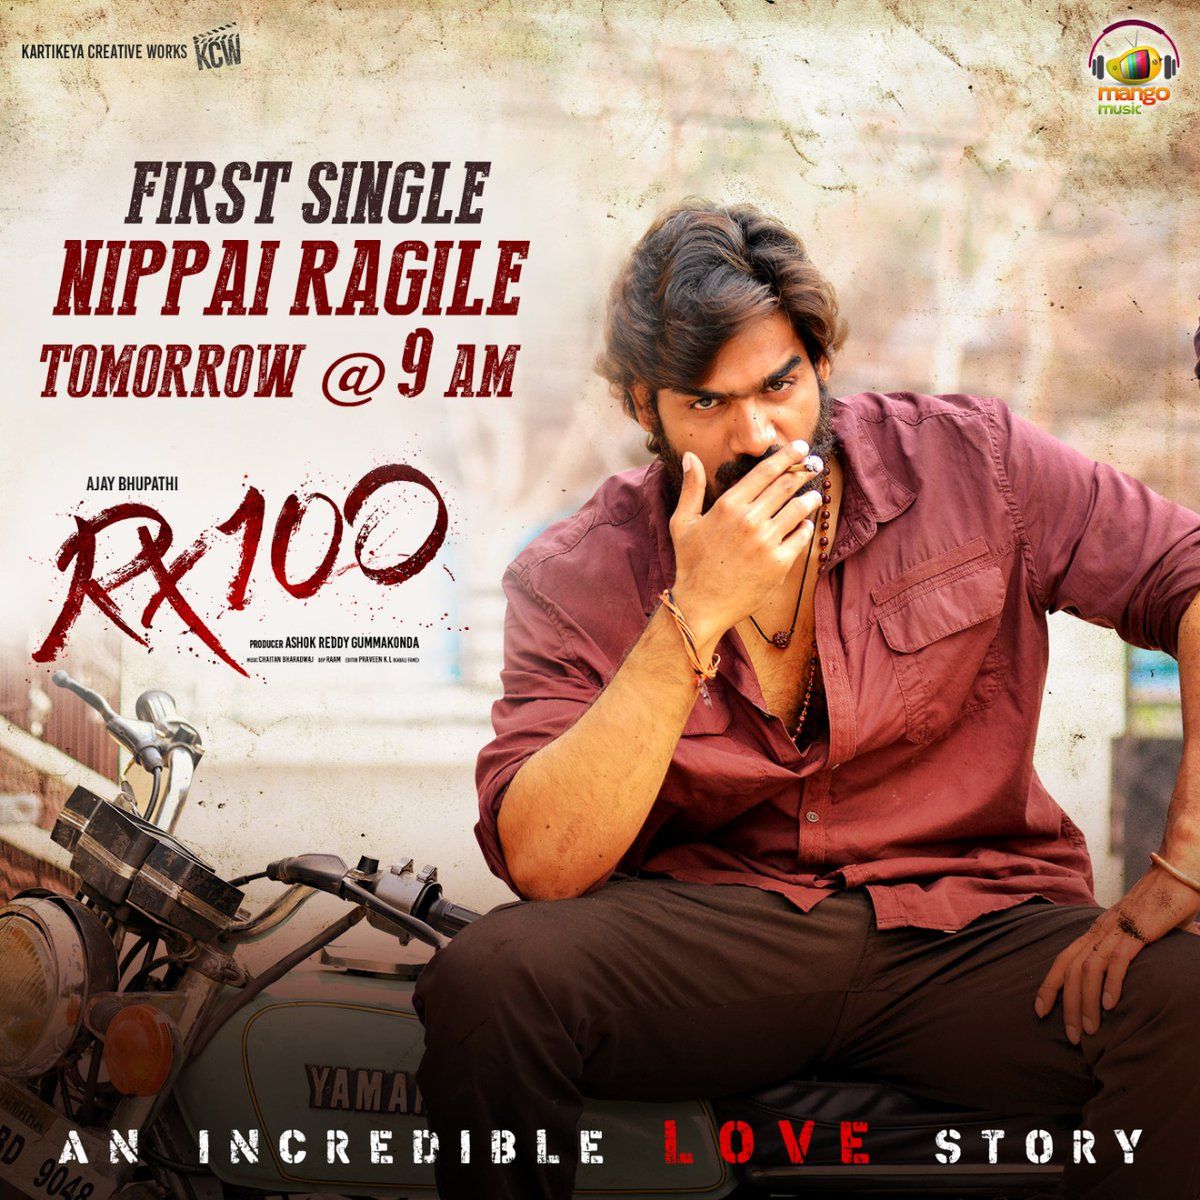 RX 100 Movie Nippai Ragile song from Tomorrow AM